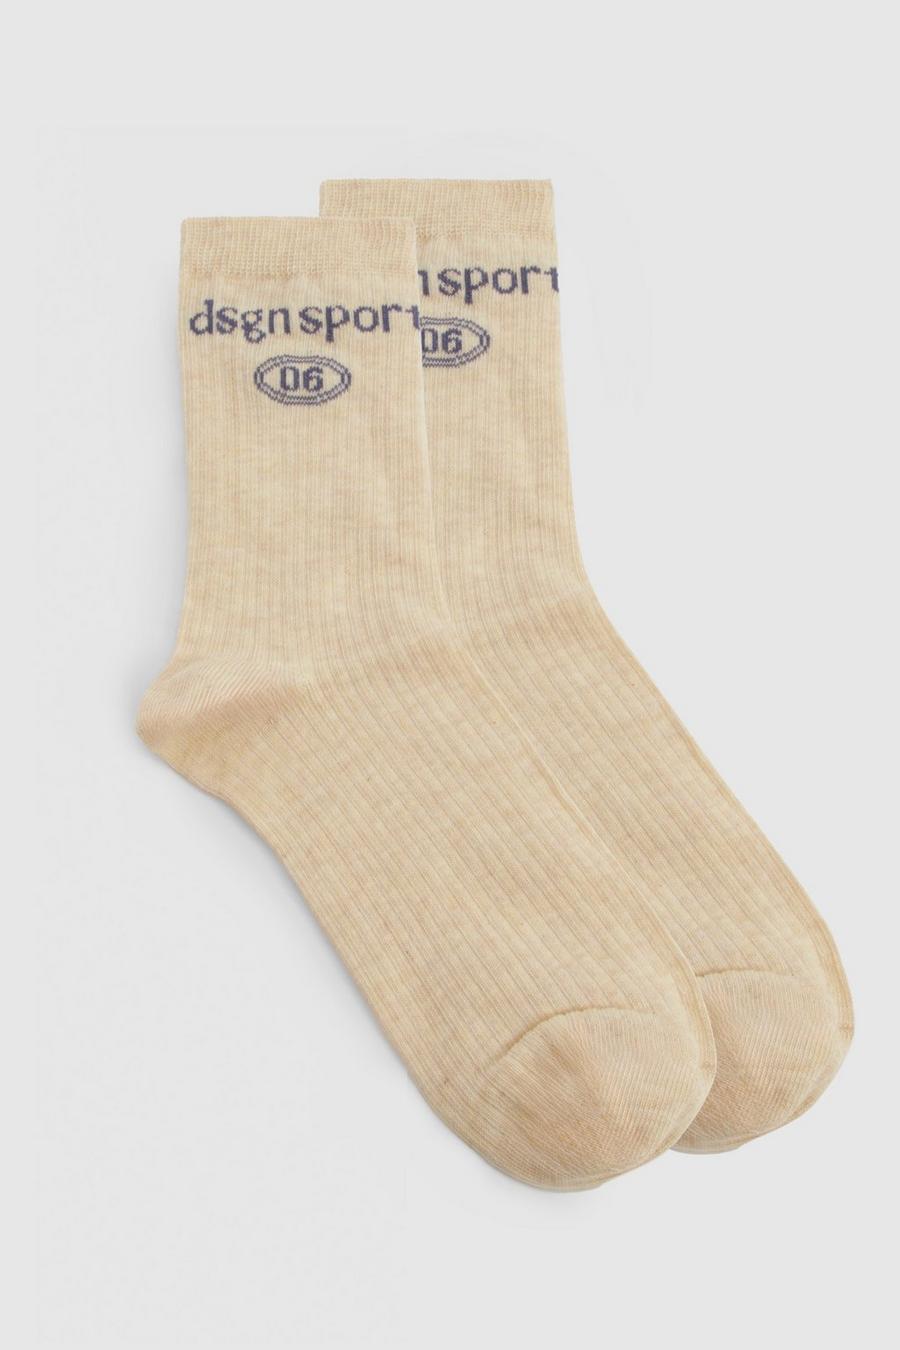 Oatmeal Dsgn Sport Single Sock  image number 1